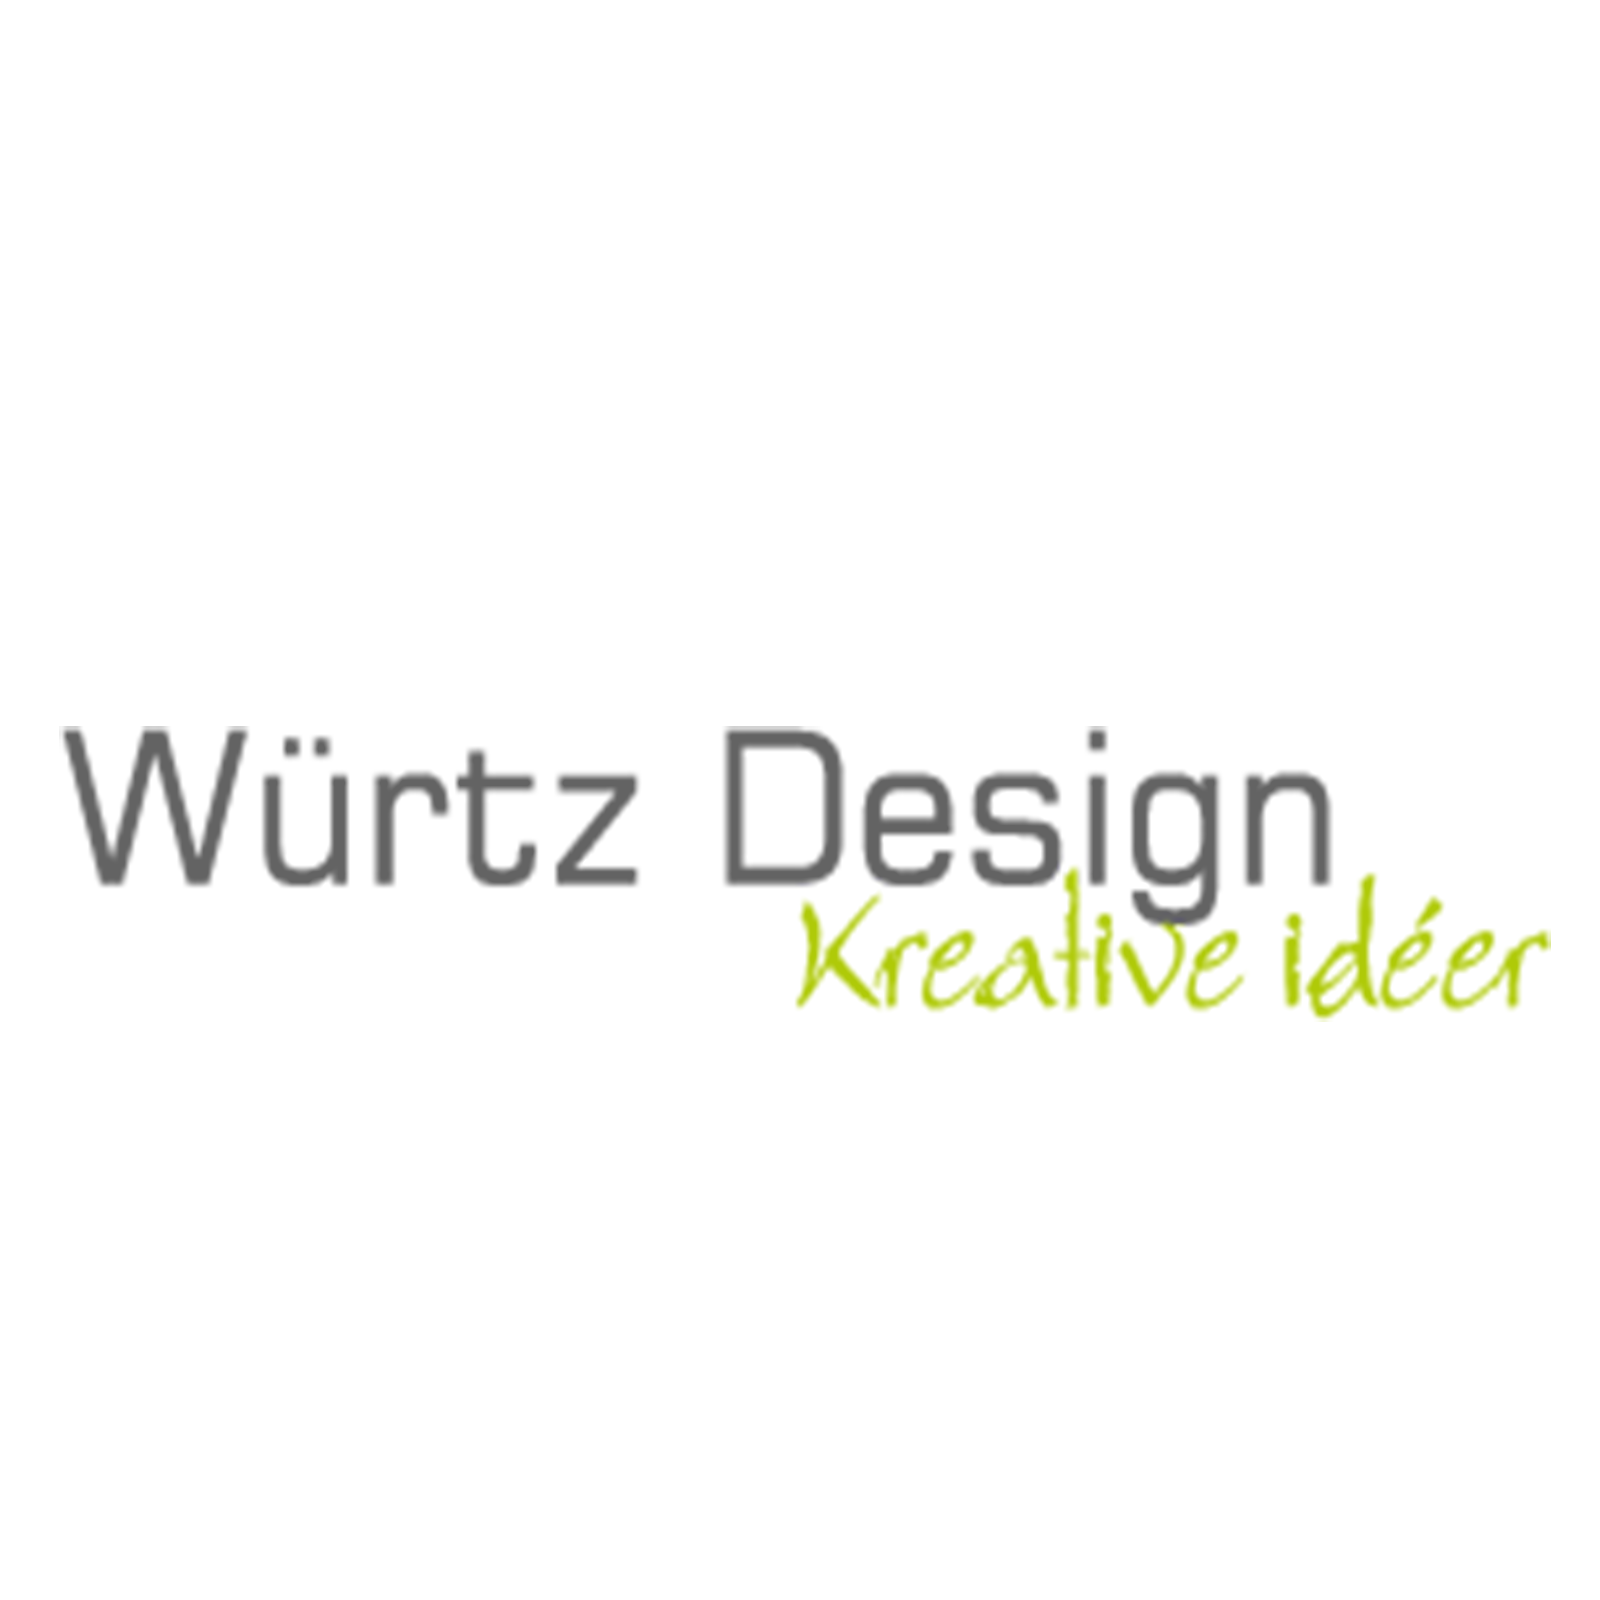 Wurtz design - kreative ideer